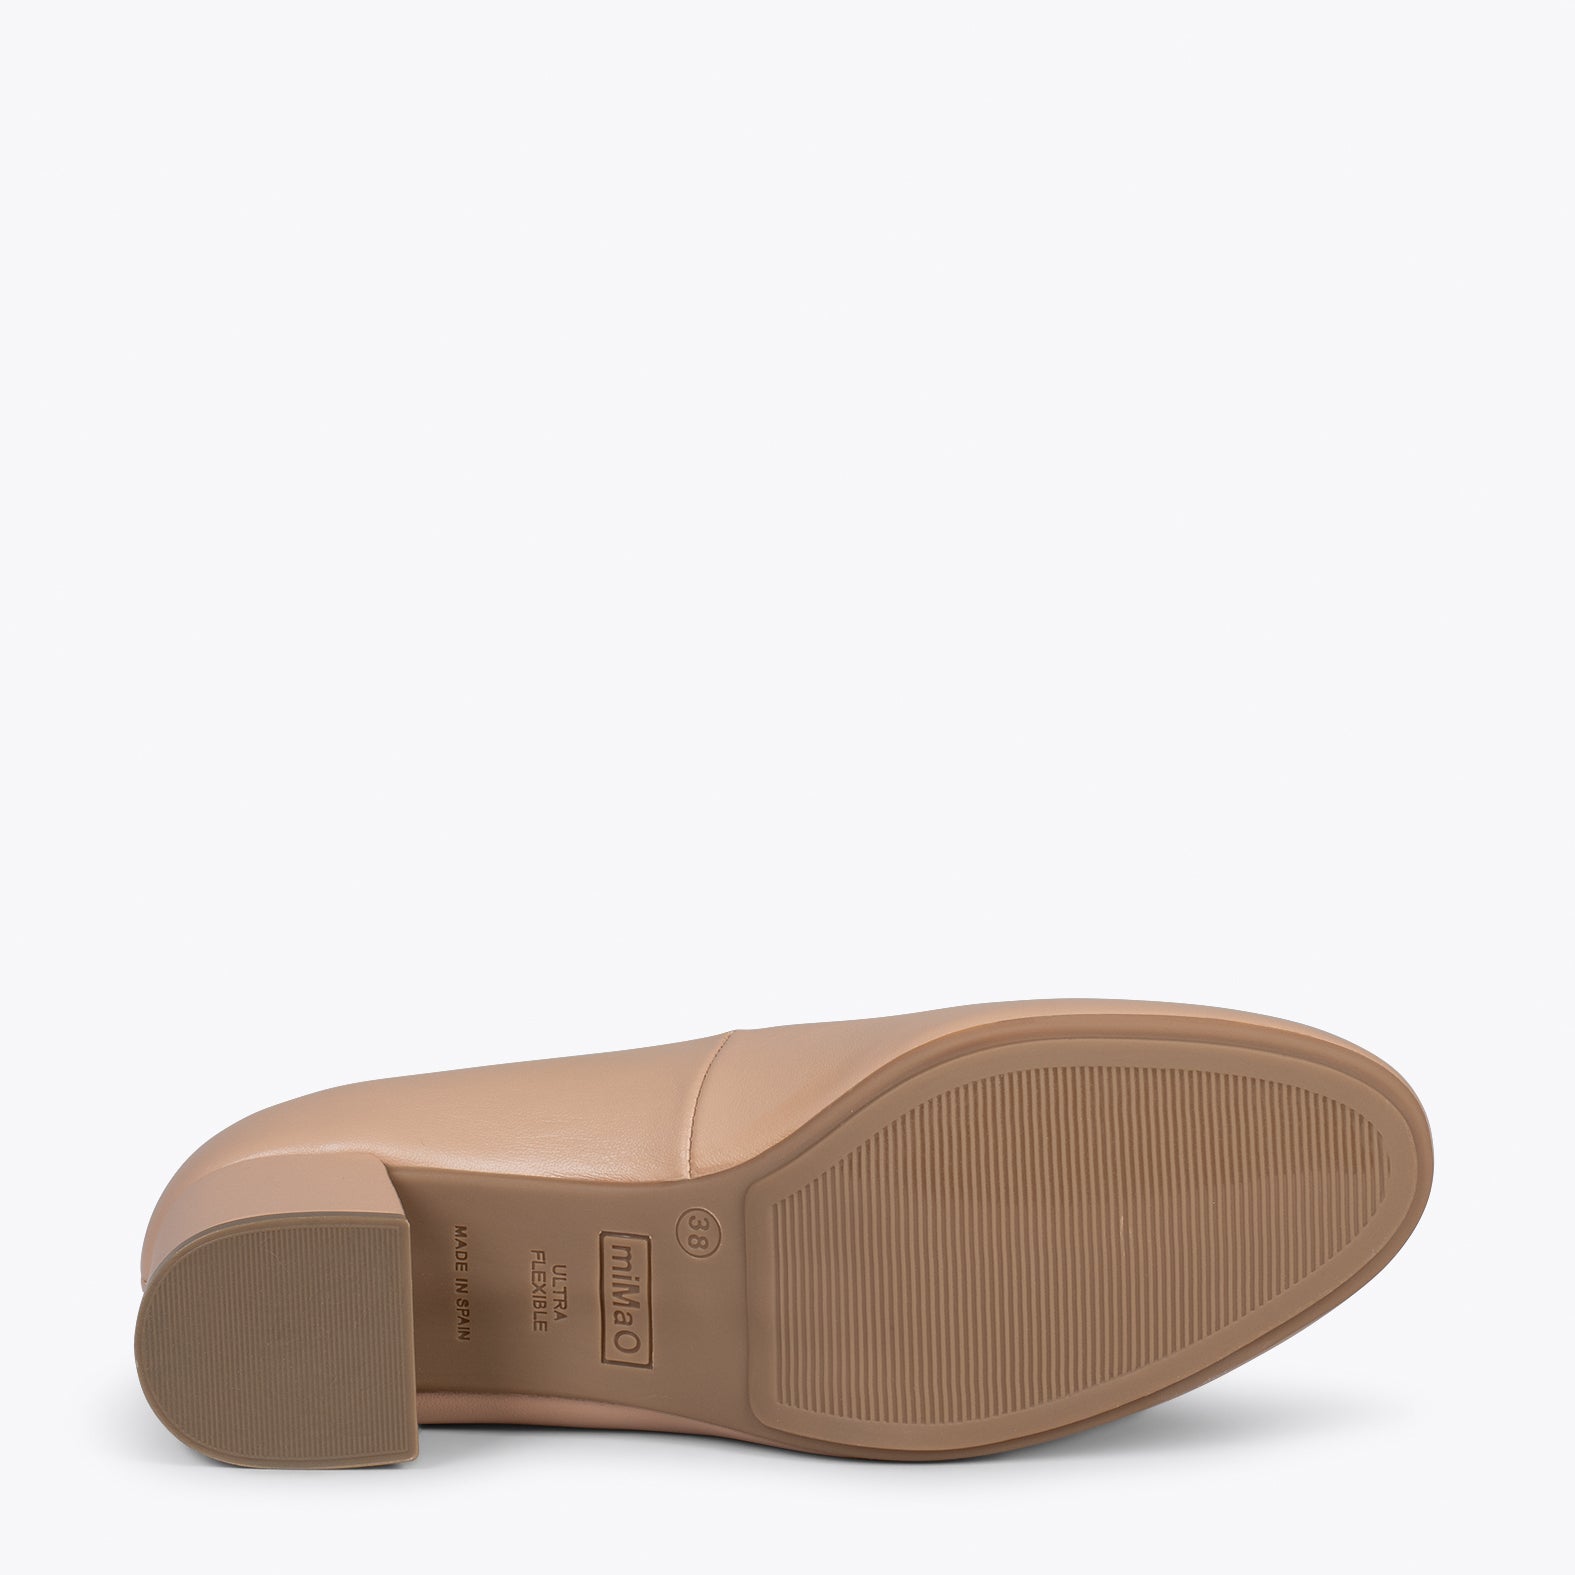 URBAN REDONDO SALÓN – Zapatos de tacón bajo de napa NUDE